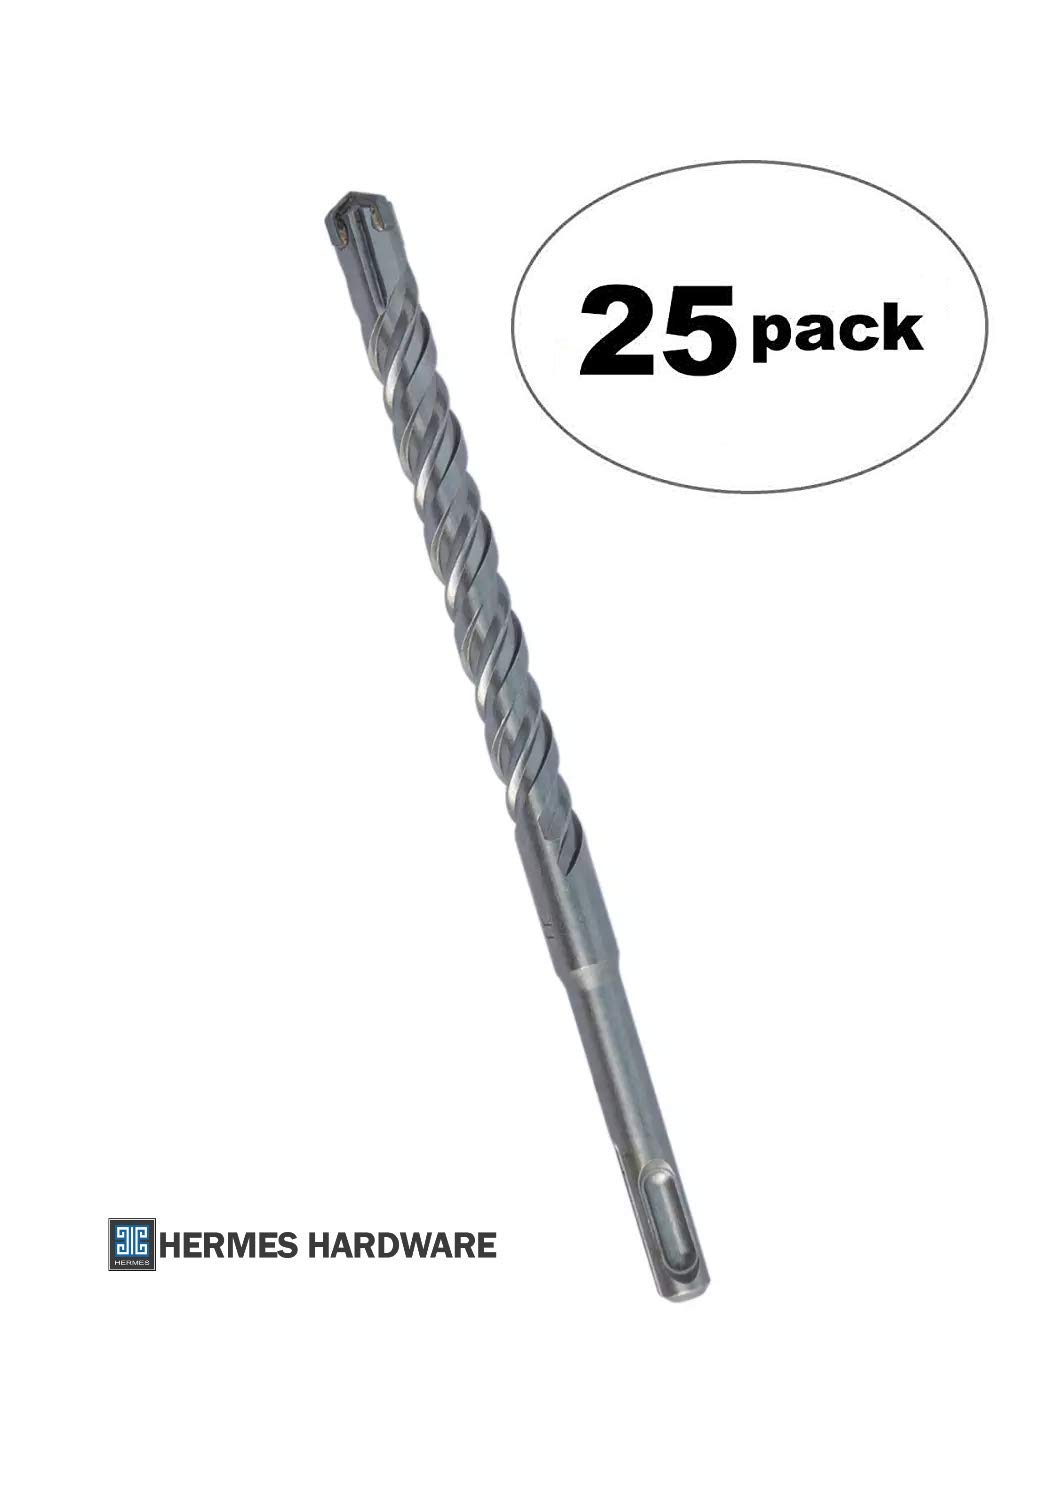 Hermes Hardware 25 Pack- SDS Plus Hammer Drill Bits 1/4″ (6.5